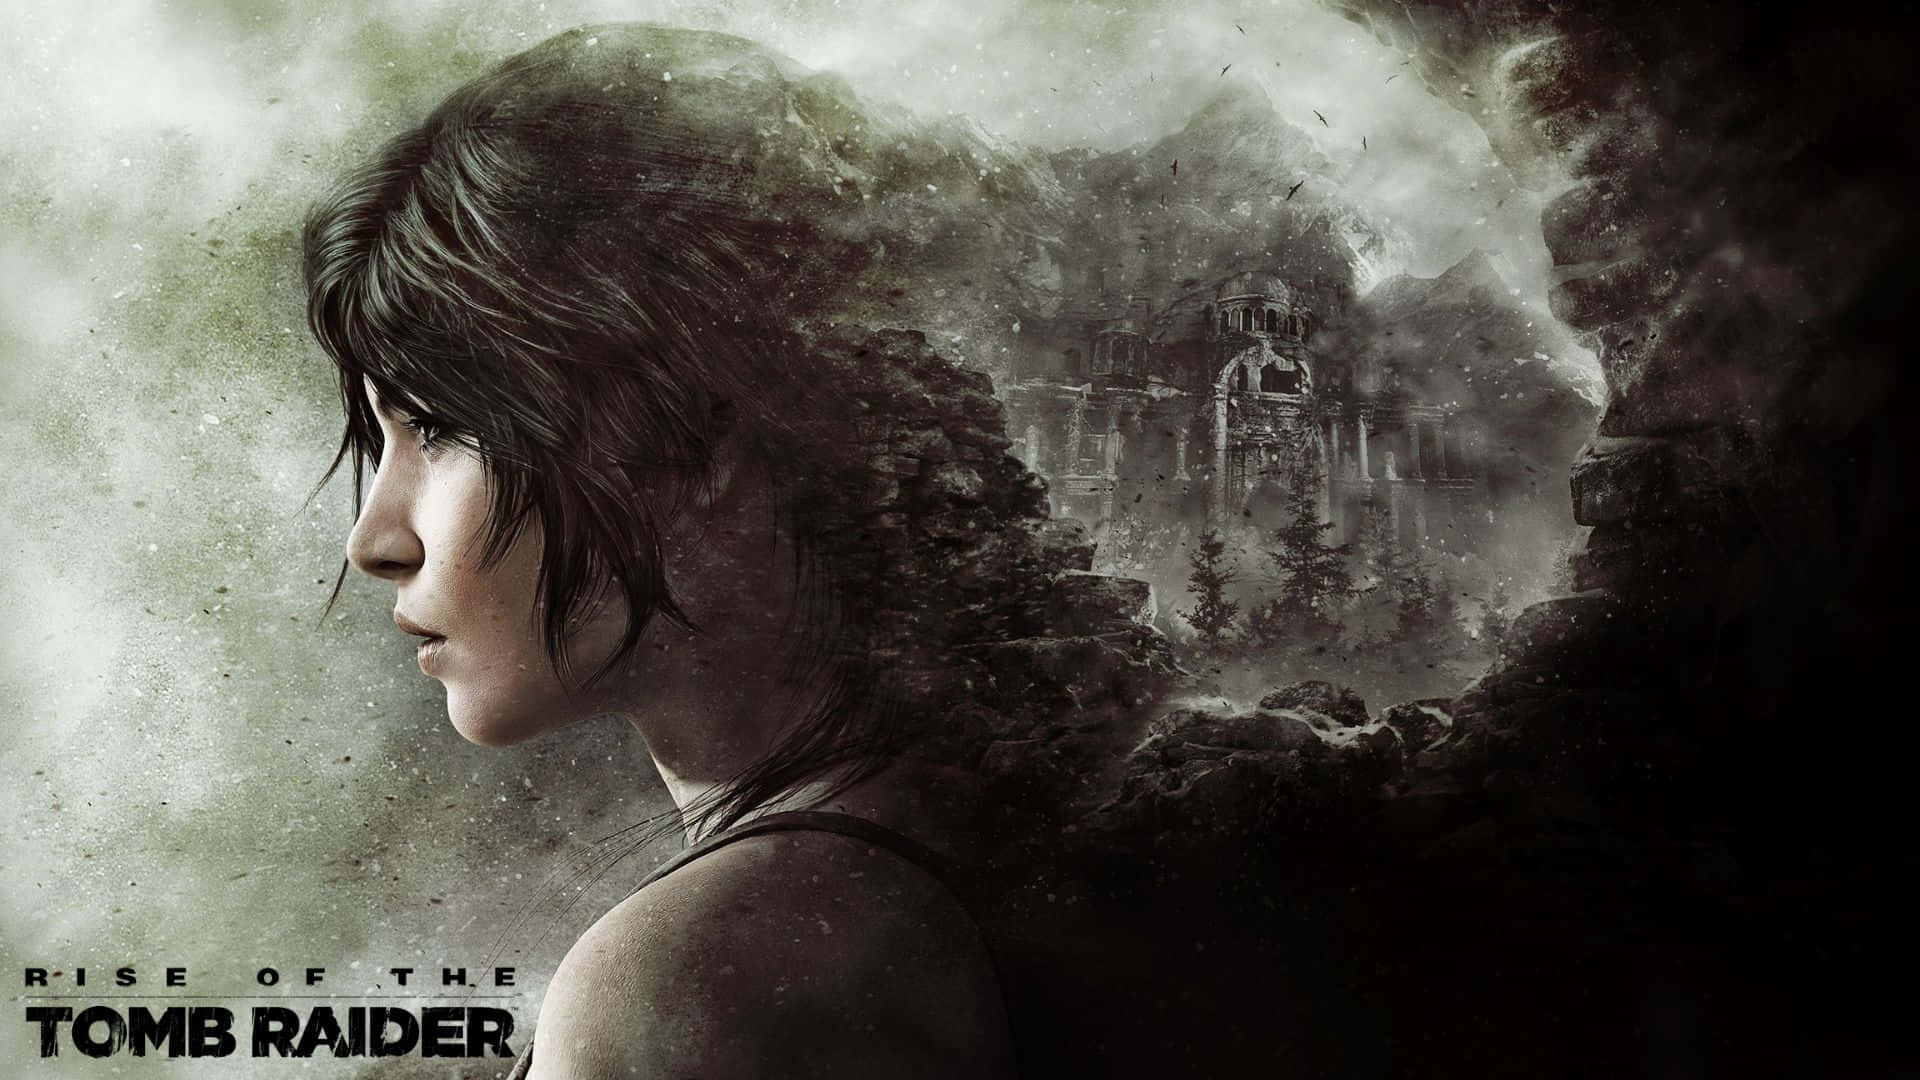 Fondode Pantalla De Lara Croft En Rise Of The Tomb Raider, Vista Lateral En 1080p.